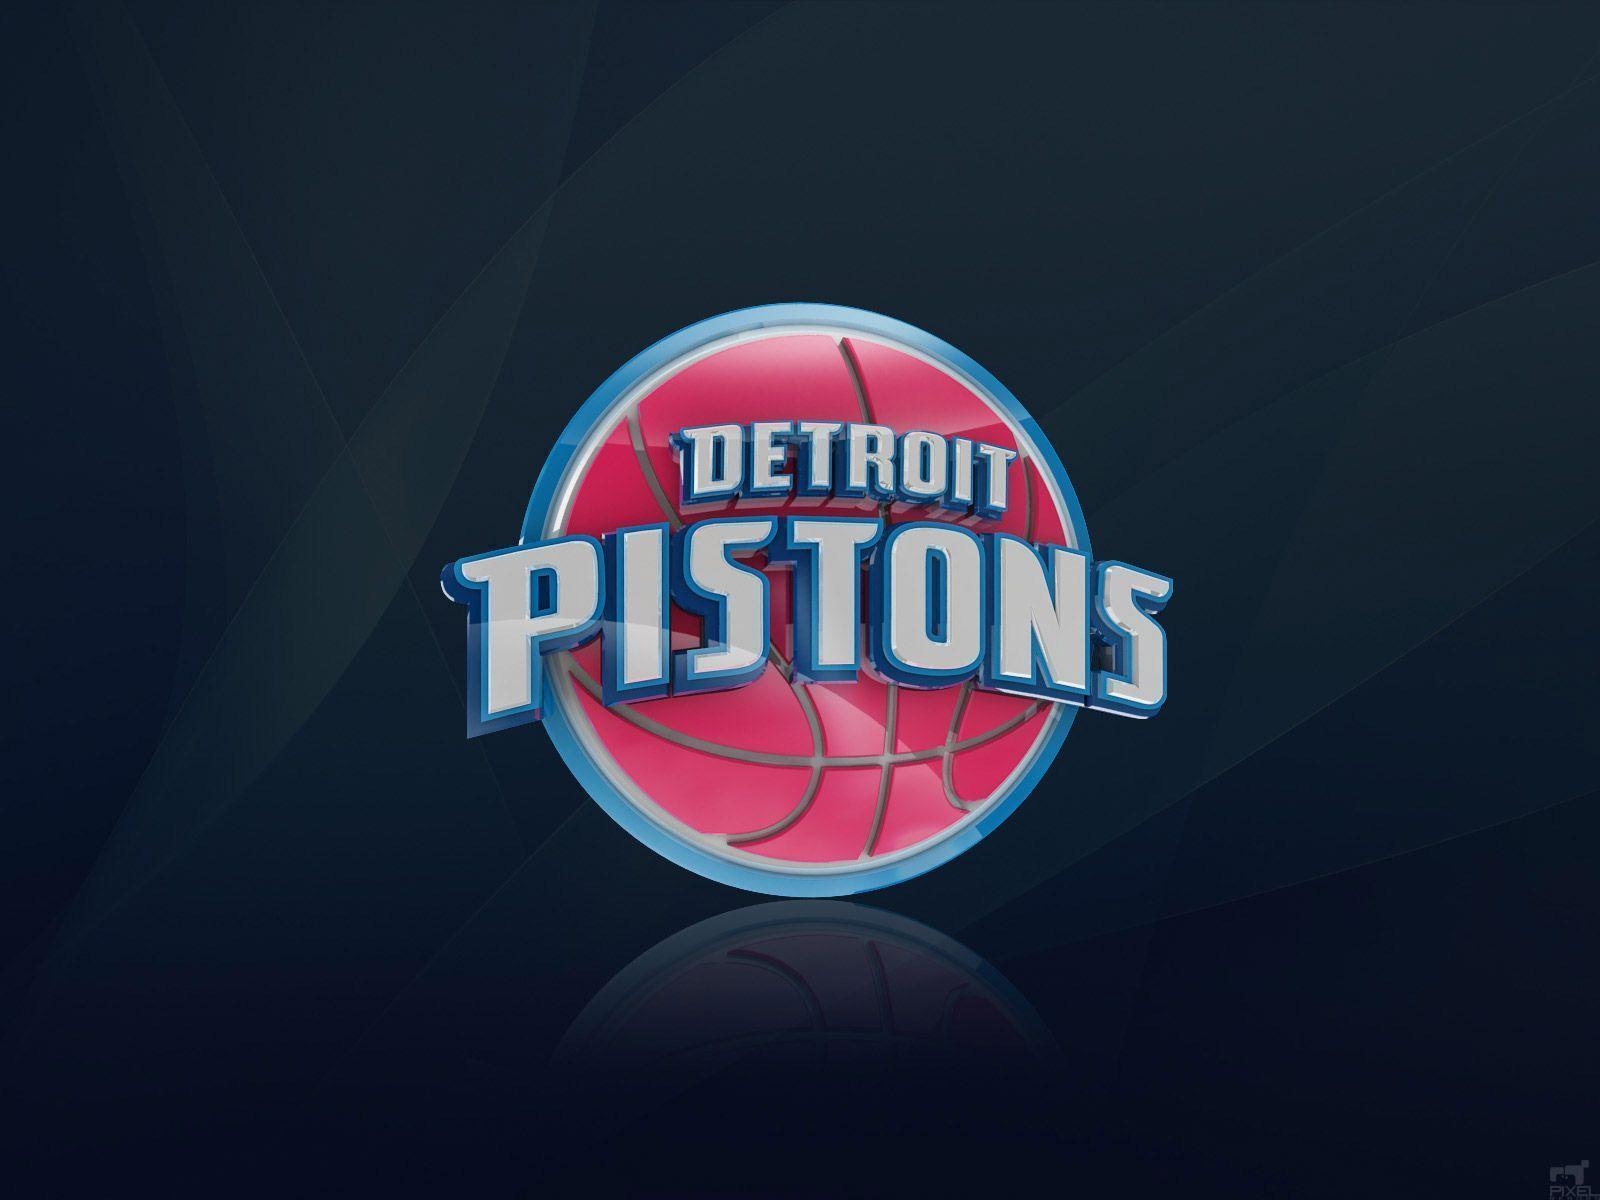 Detroit Pistons 3D Logo Wallpaper. Basketball Wallpaper at